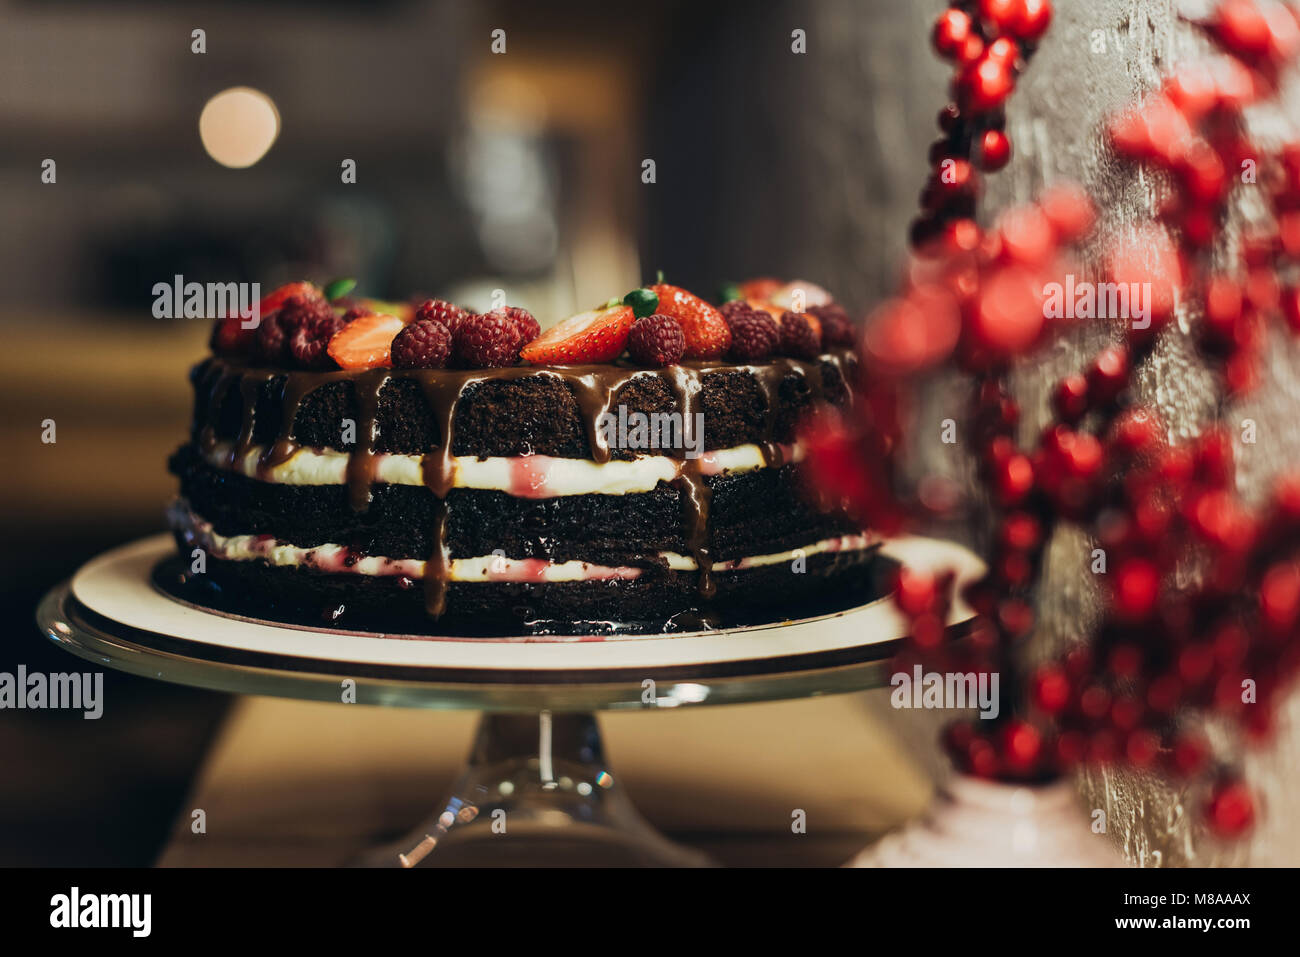 Chocolate cake on cake stand Stock Photo